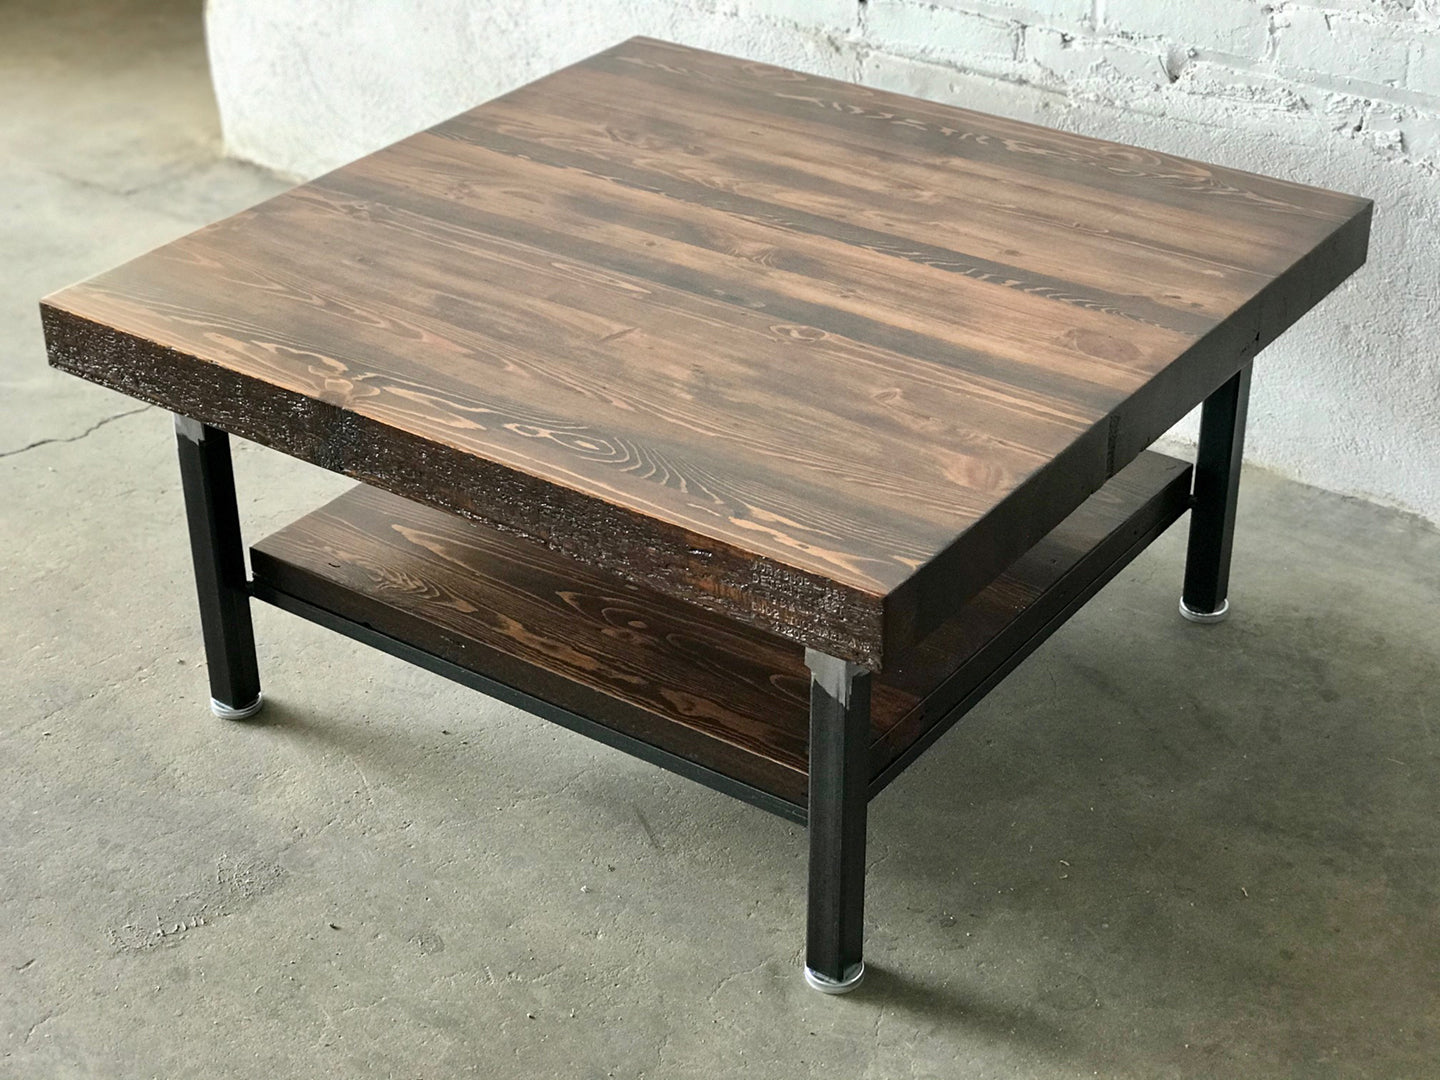 Grand Boulevard Modern Farmhouse Coffee Table With Shelf - Walnut Stain Finish